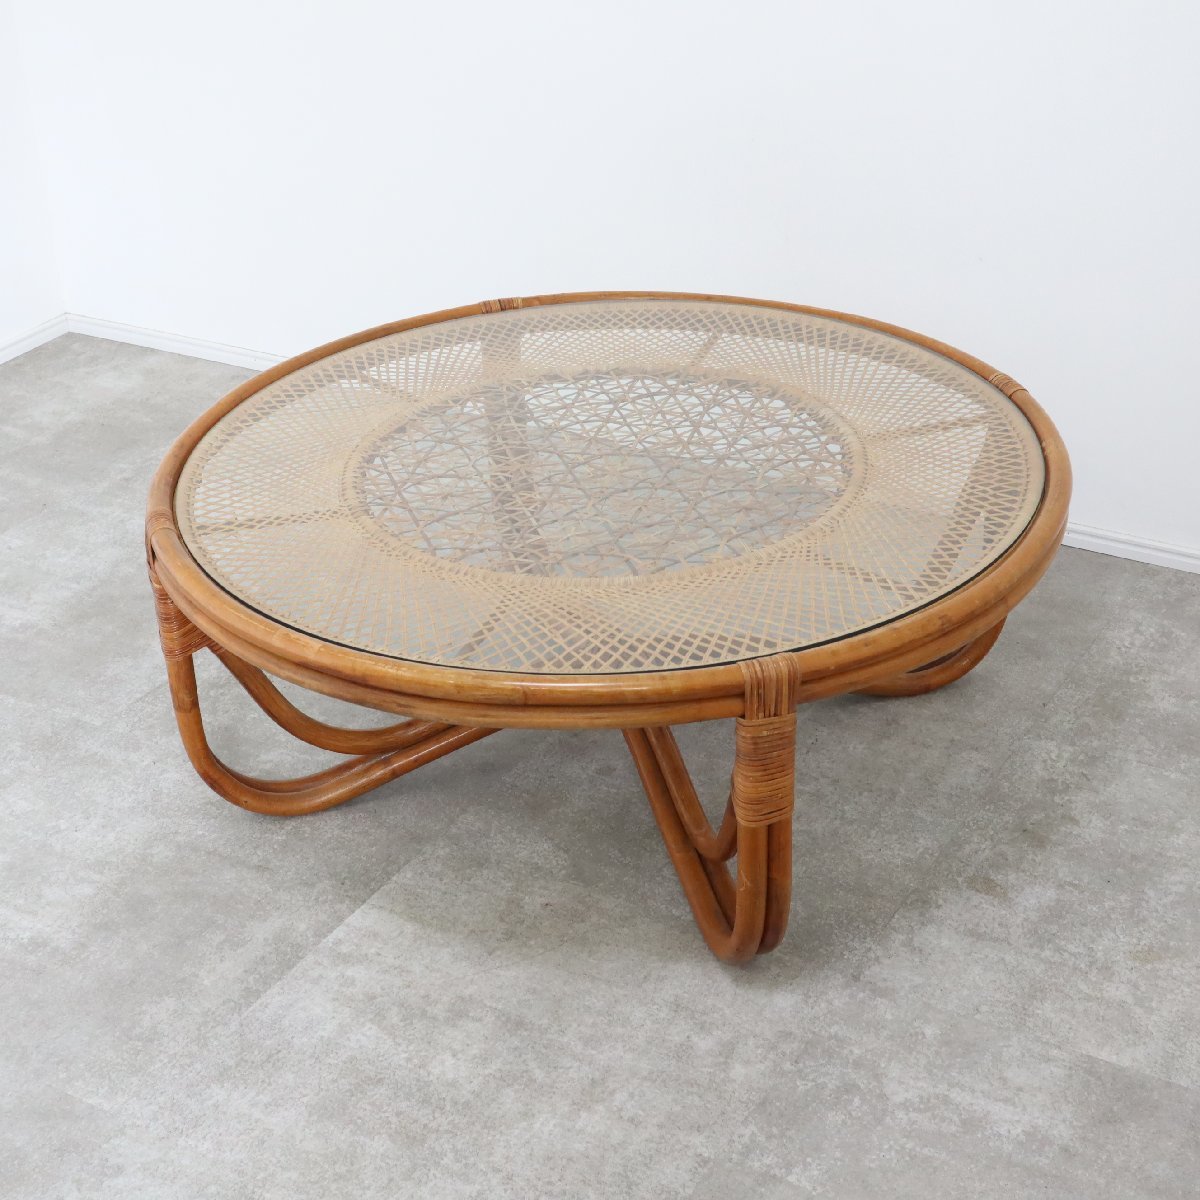 kazama ラタンテーブル 籐の家具 ガラス天板付き 丸/ラウンドテーブル 